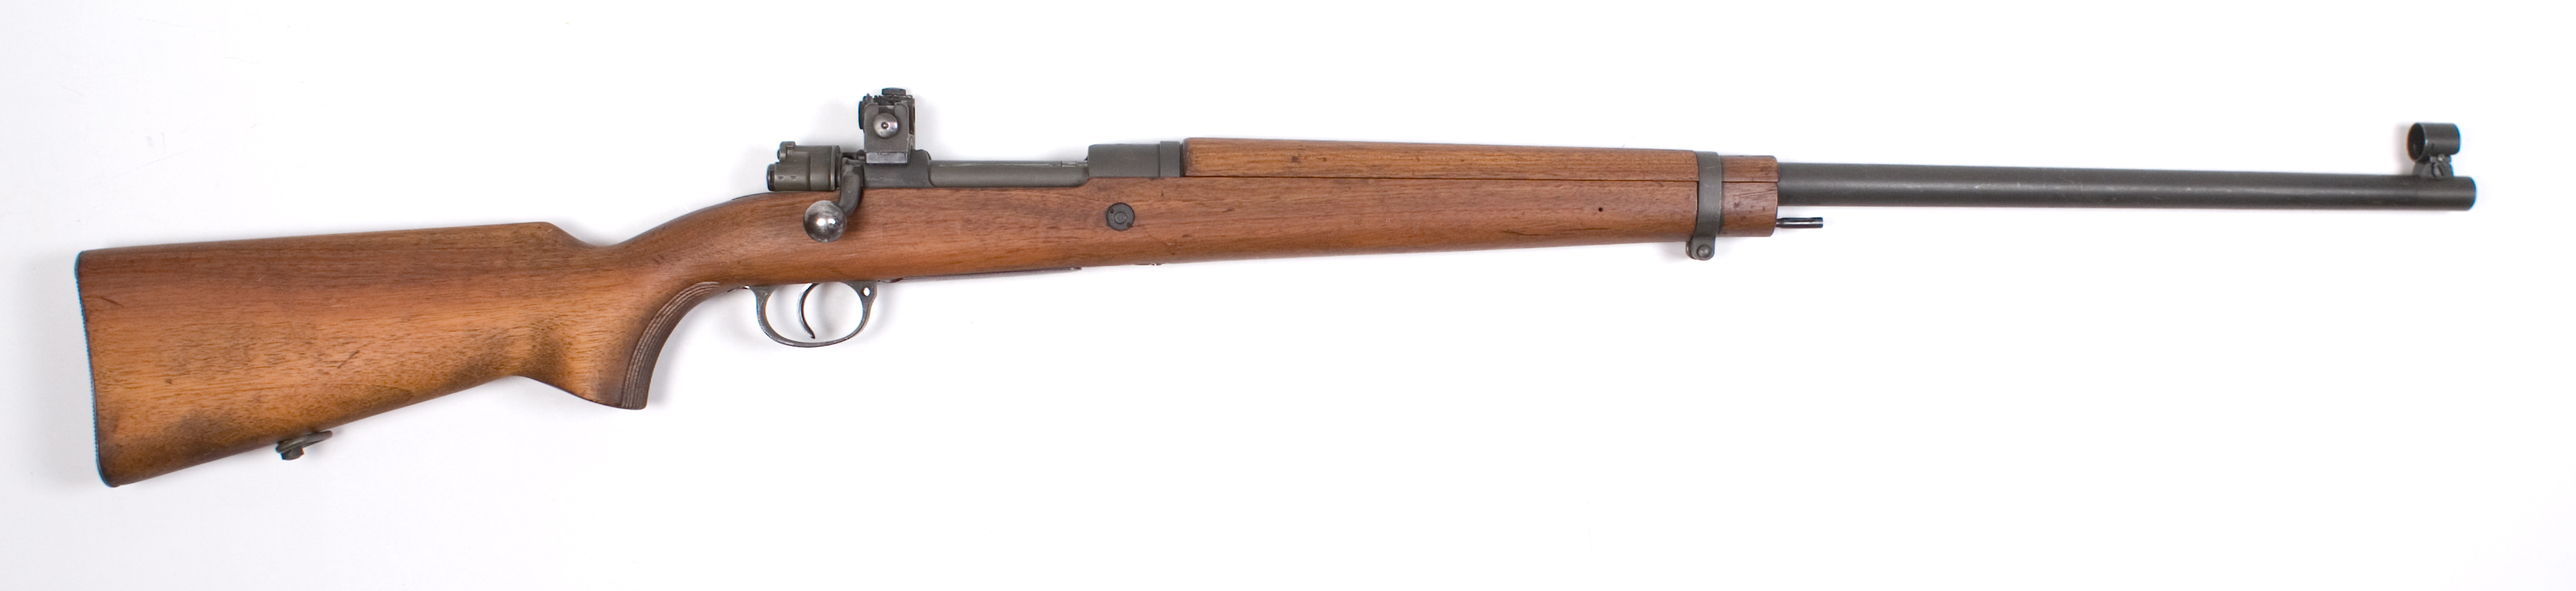 ./guns/rifle/bilder/Rifle-Kongsberg-Mauser-M59-7942-1.jpg